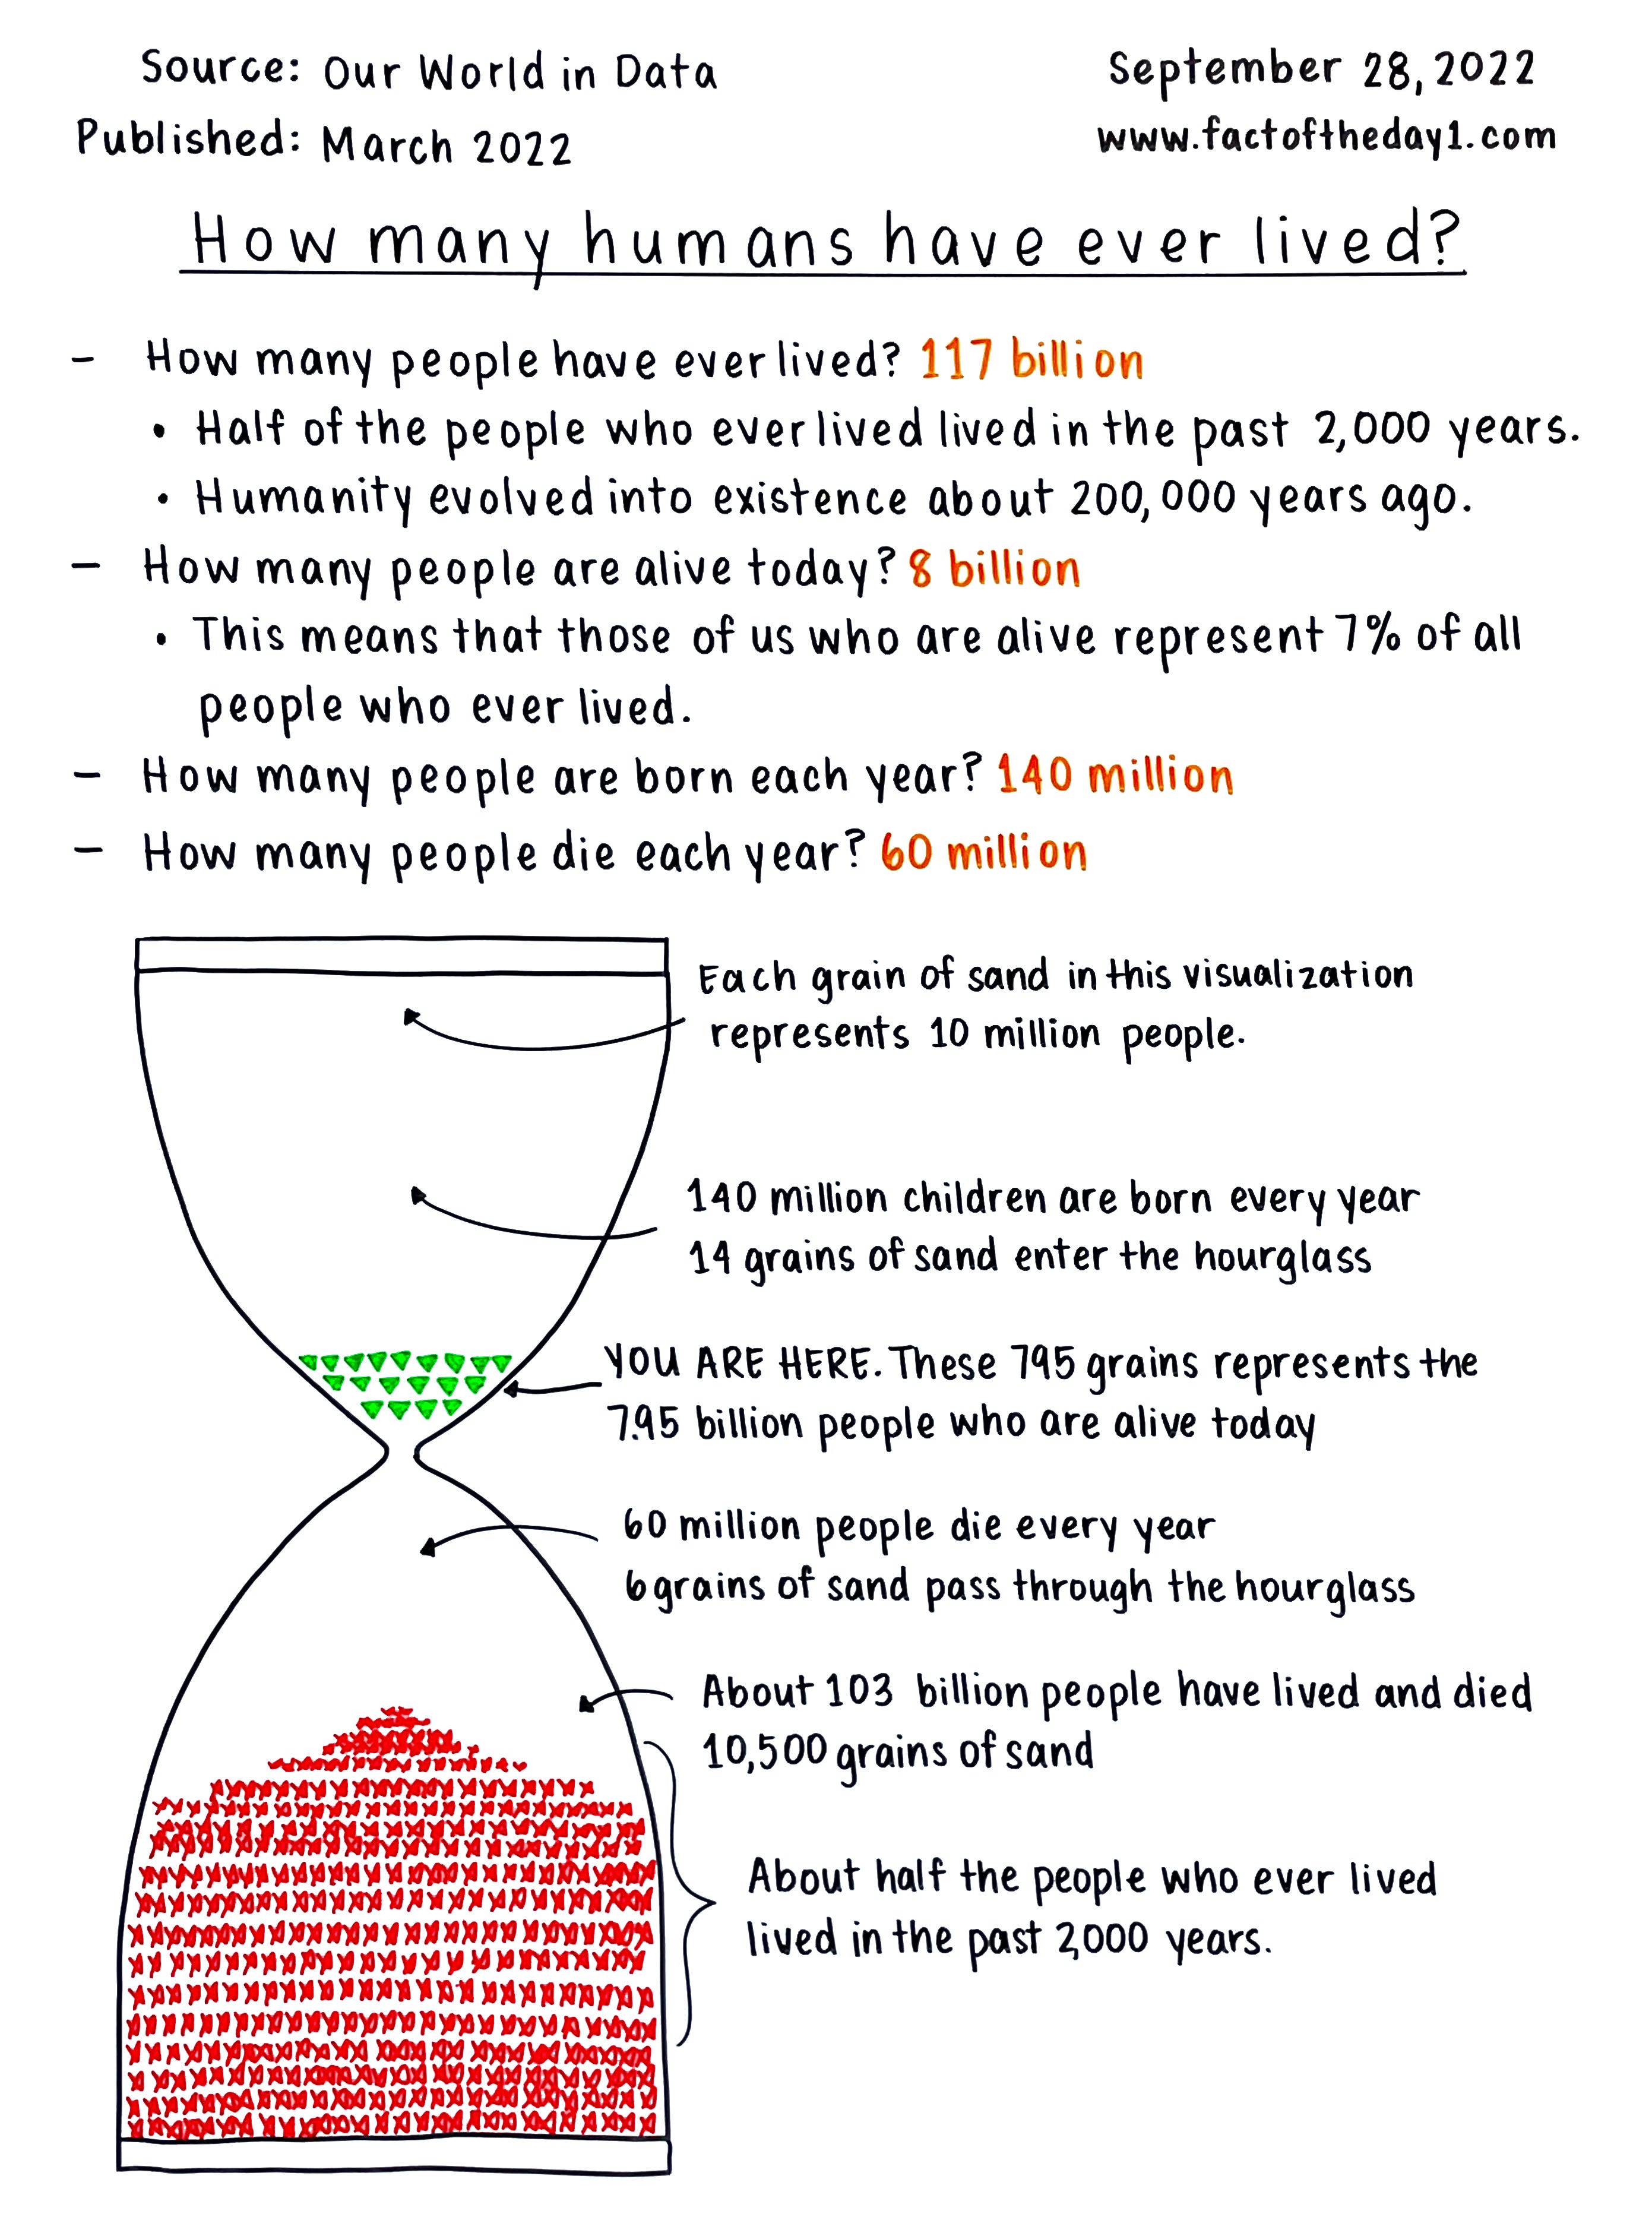 September 28 How many humans have ever lived?